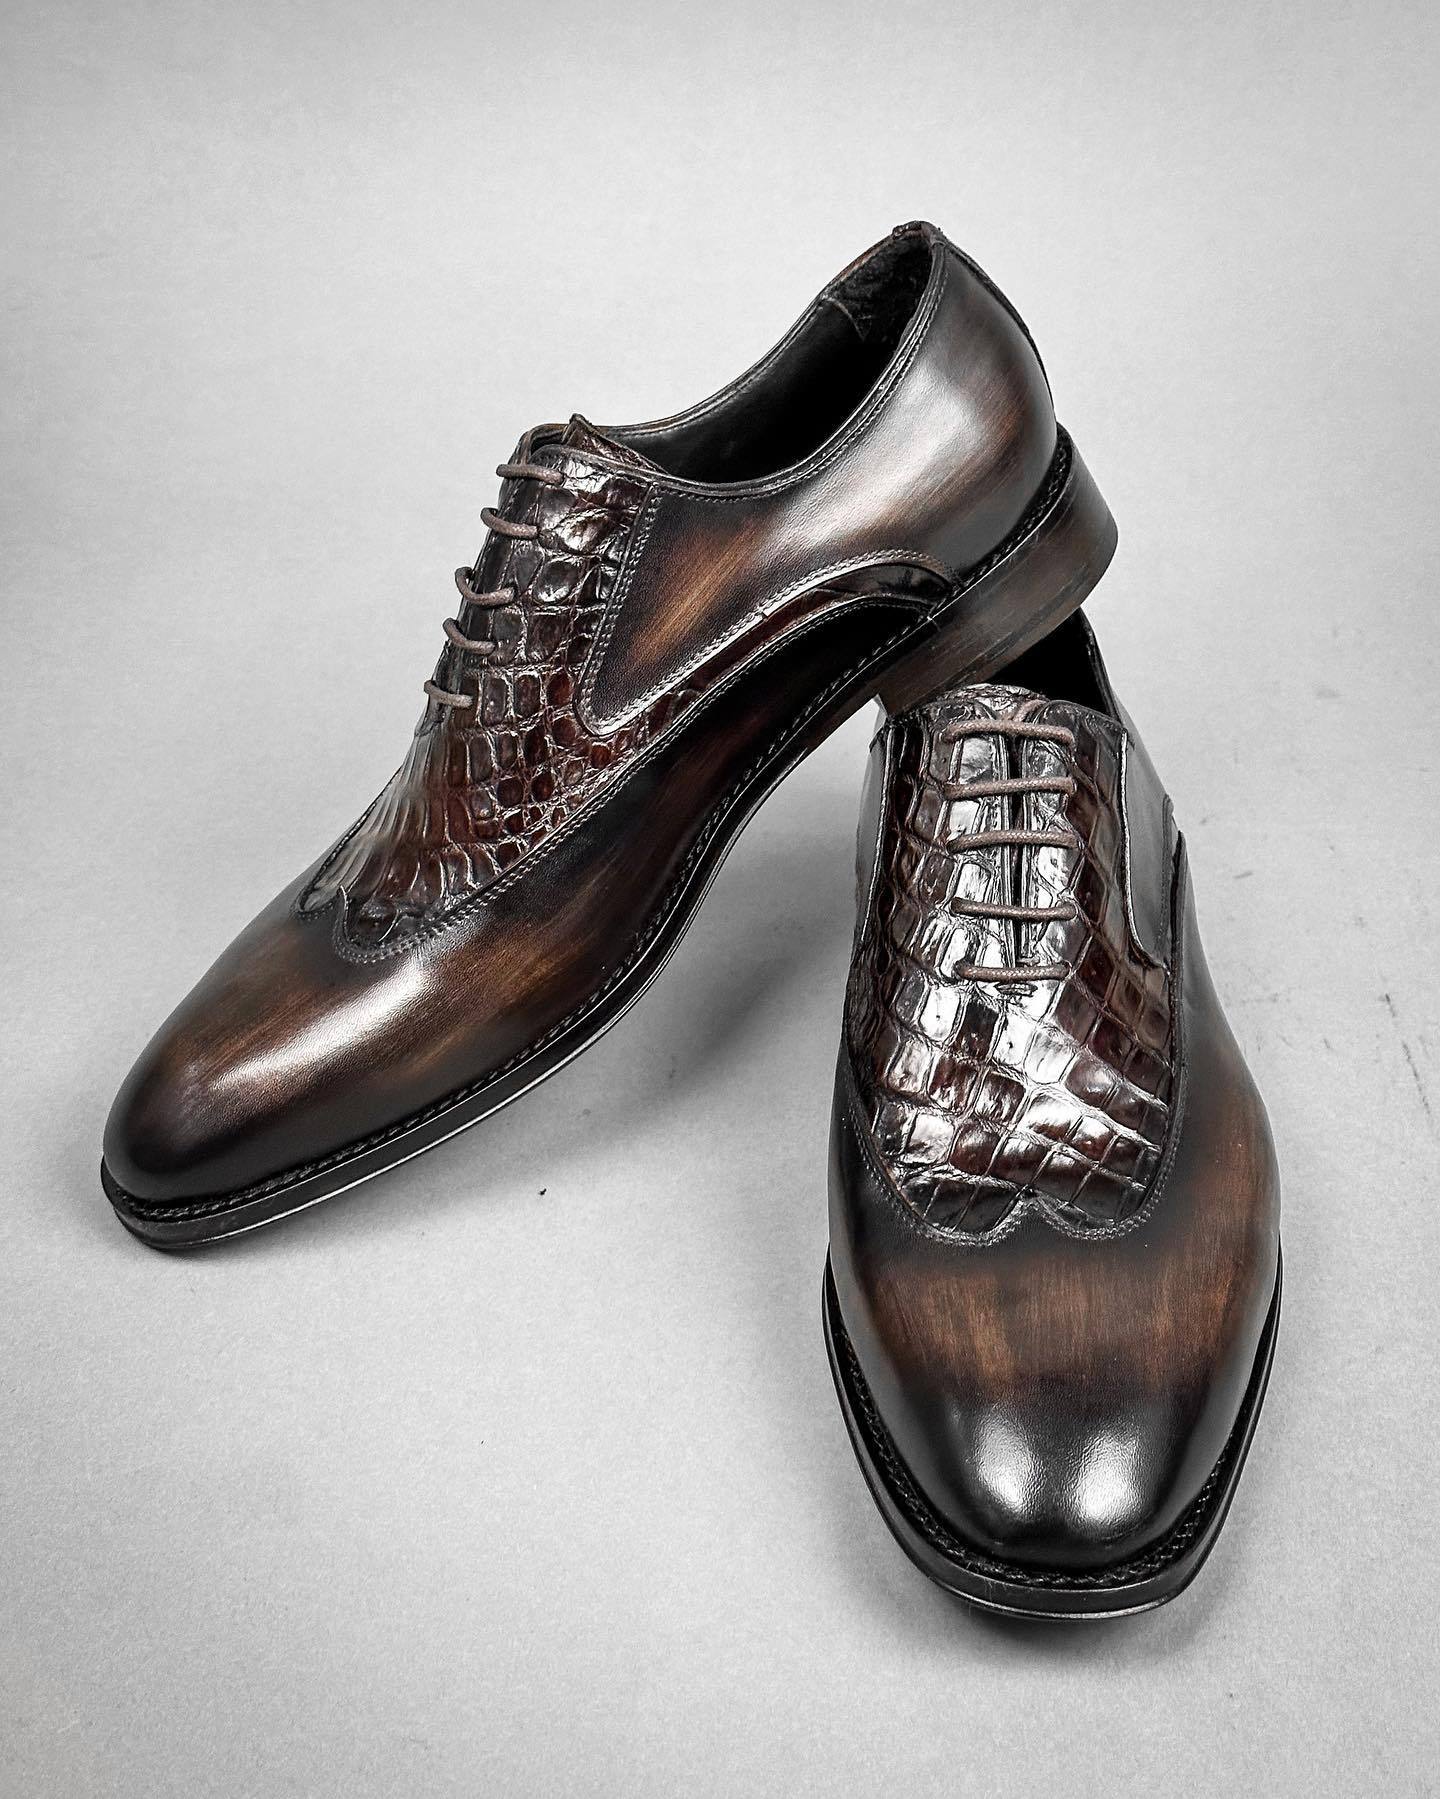 Crocodile leather dark brown gentleman's leather shoes